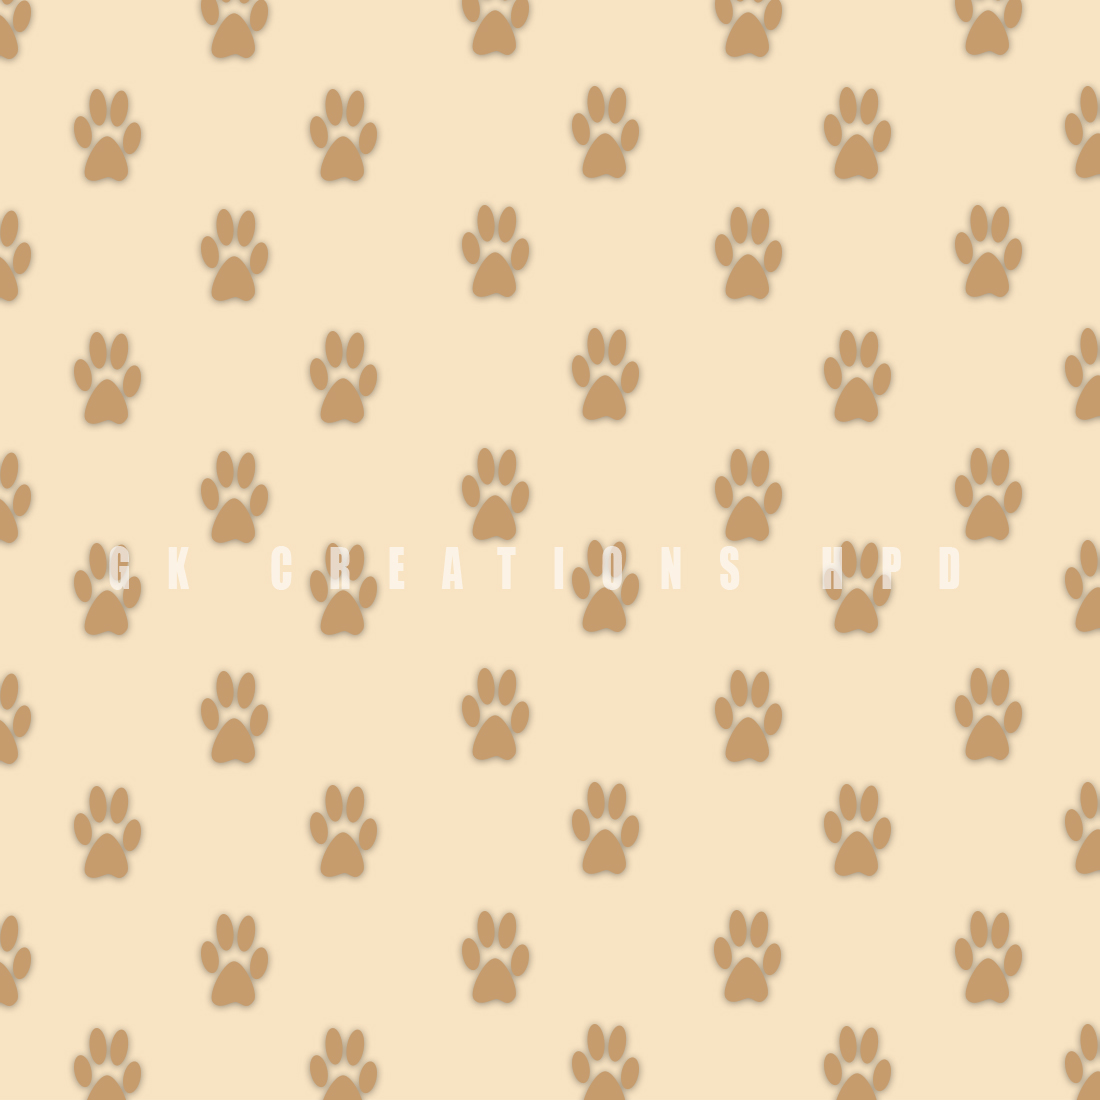 Dog paw pattern on a beige background.